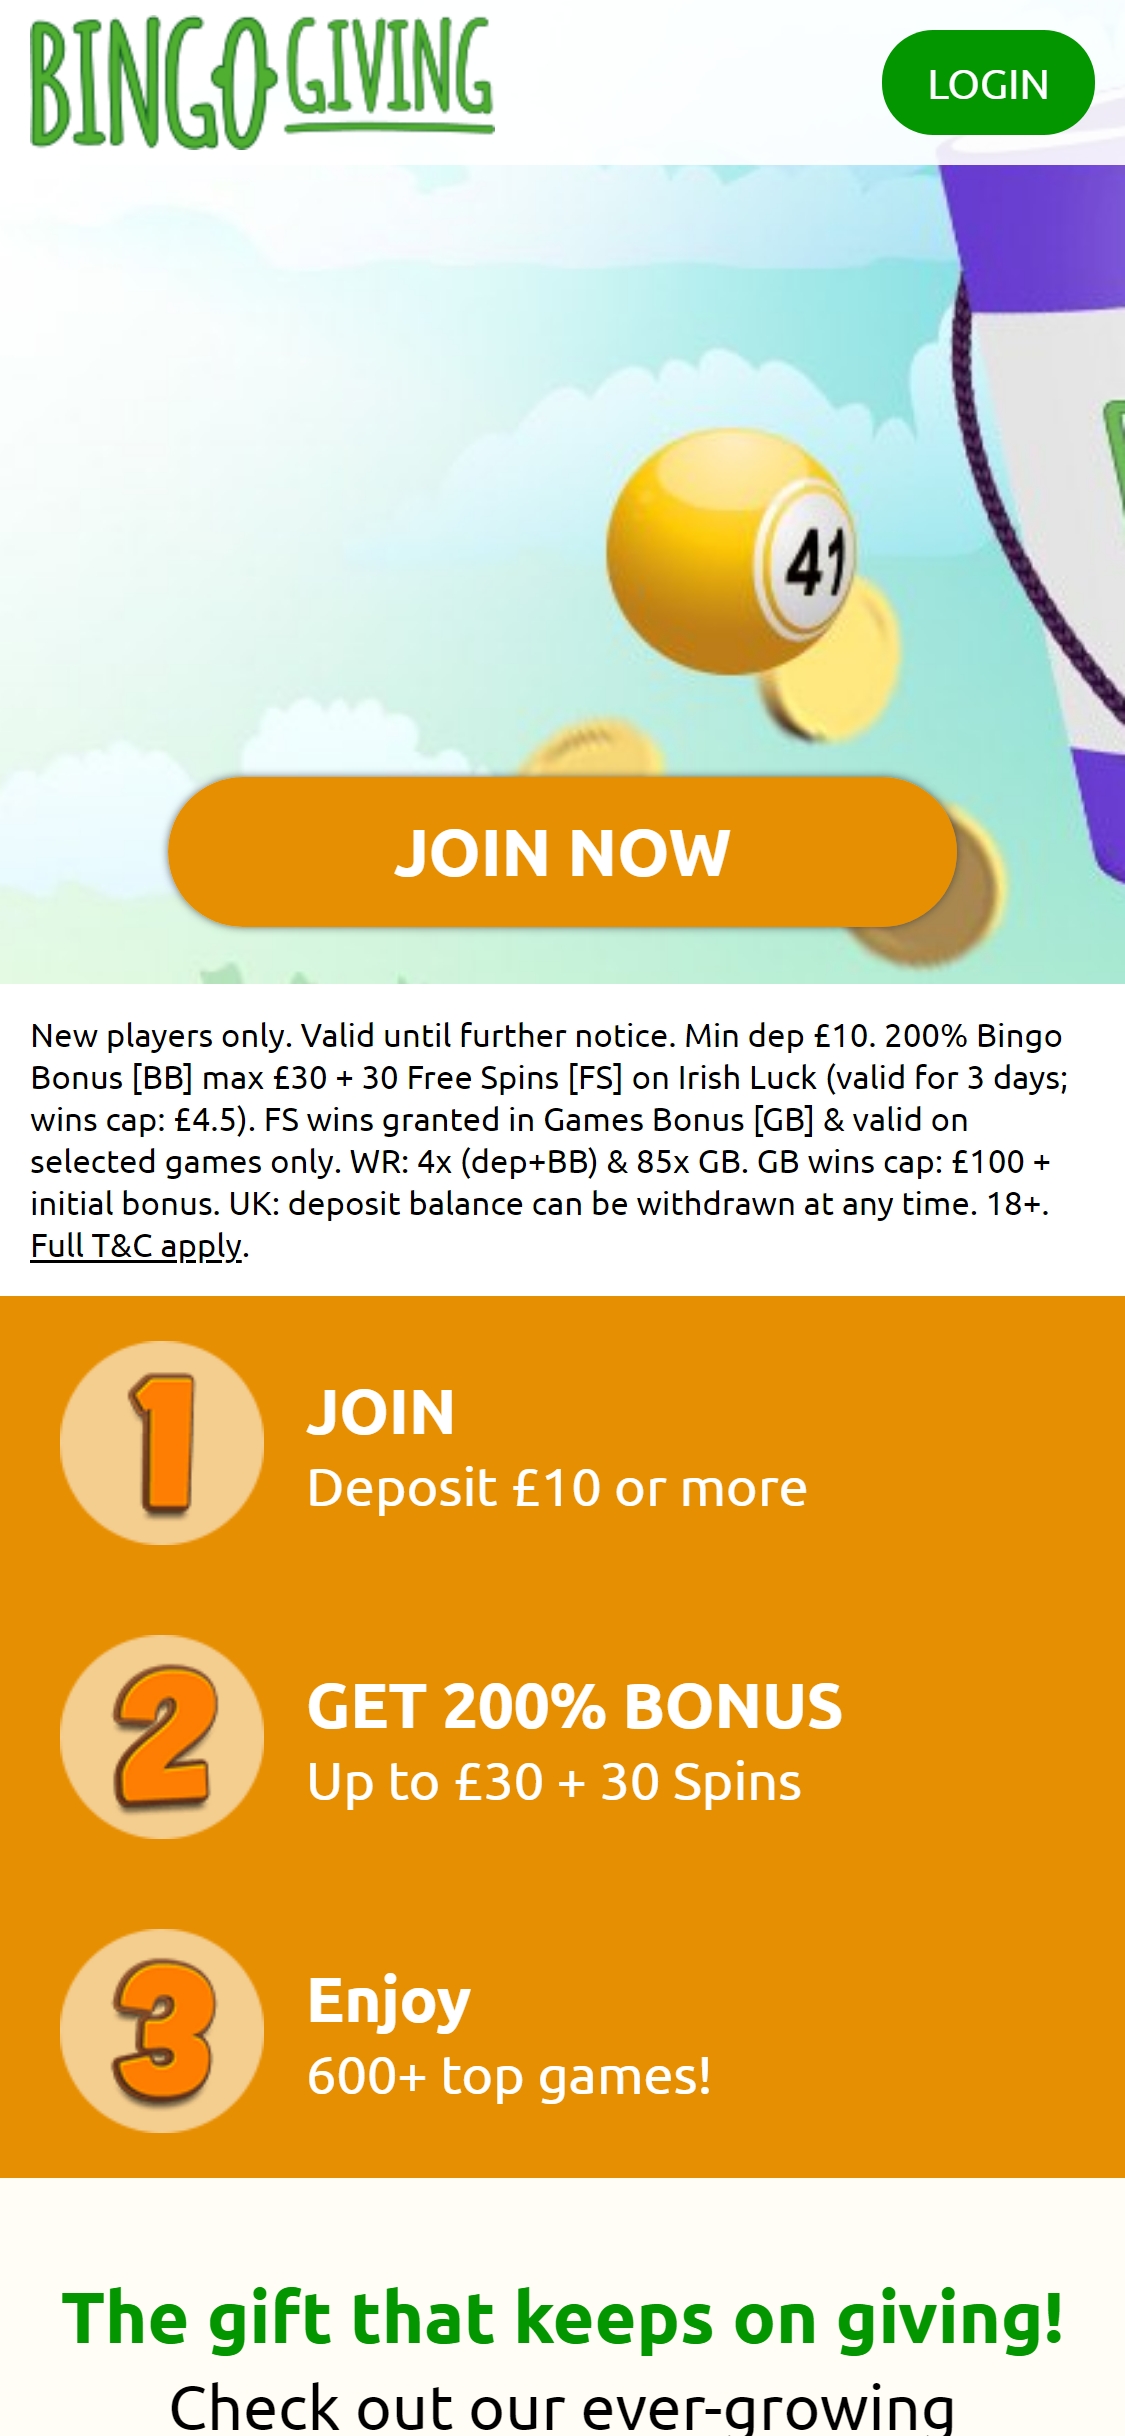 Bingo Giving Casino Mobile No Deposit Bonus Review